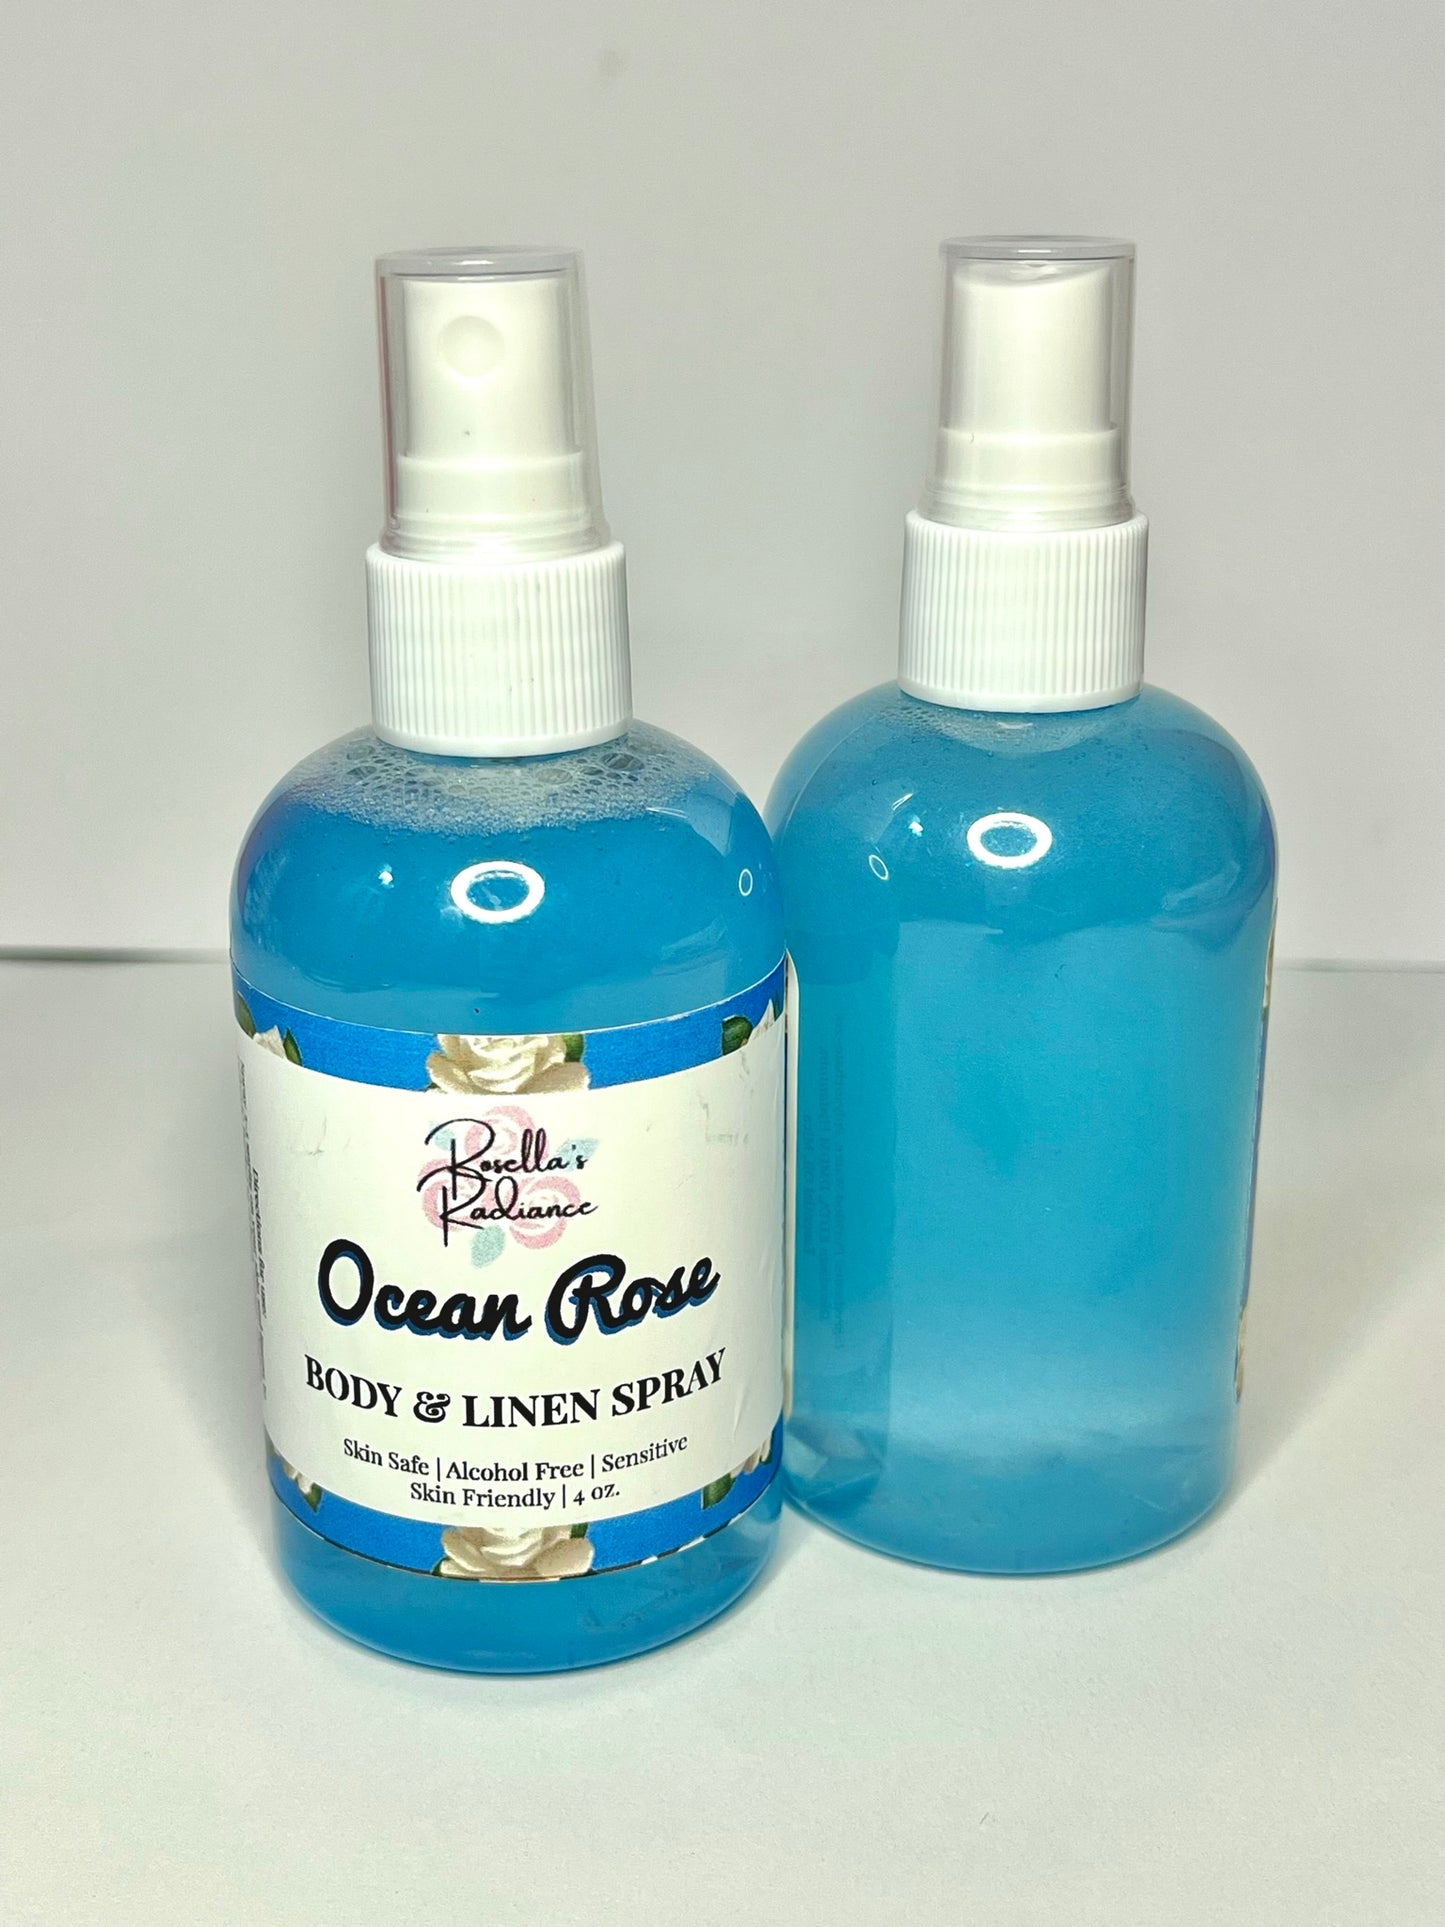 Ocean Rose Body & Linen Spray